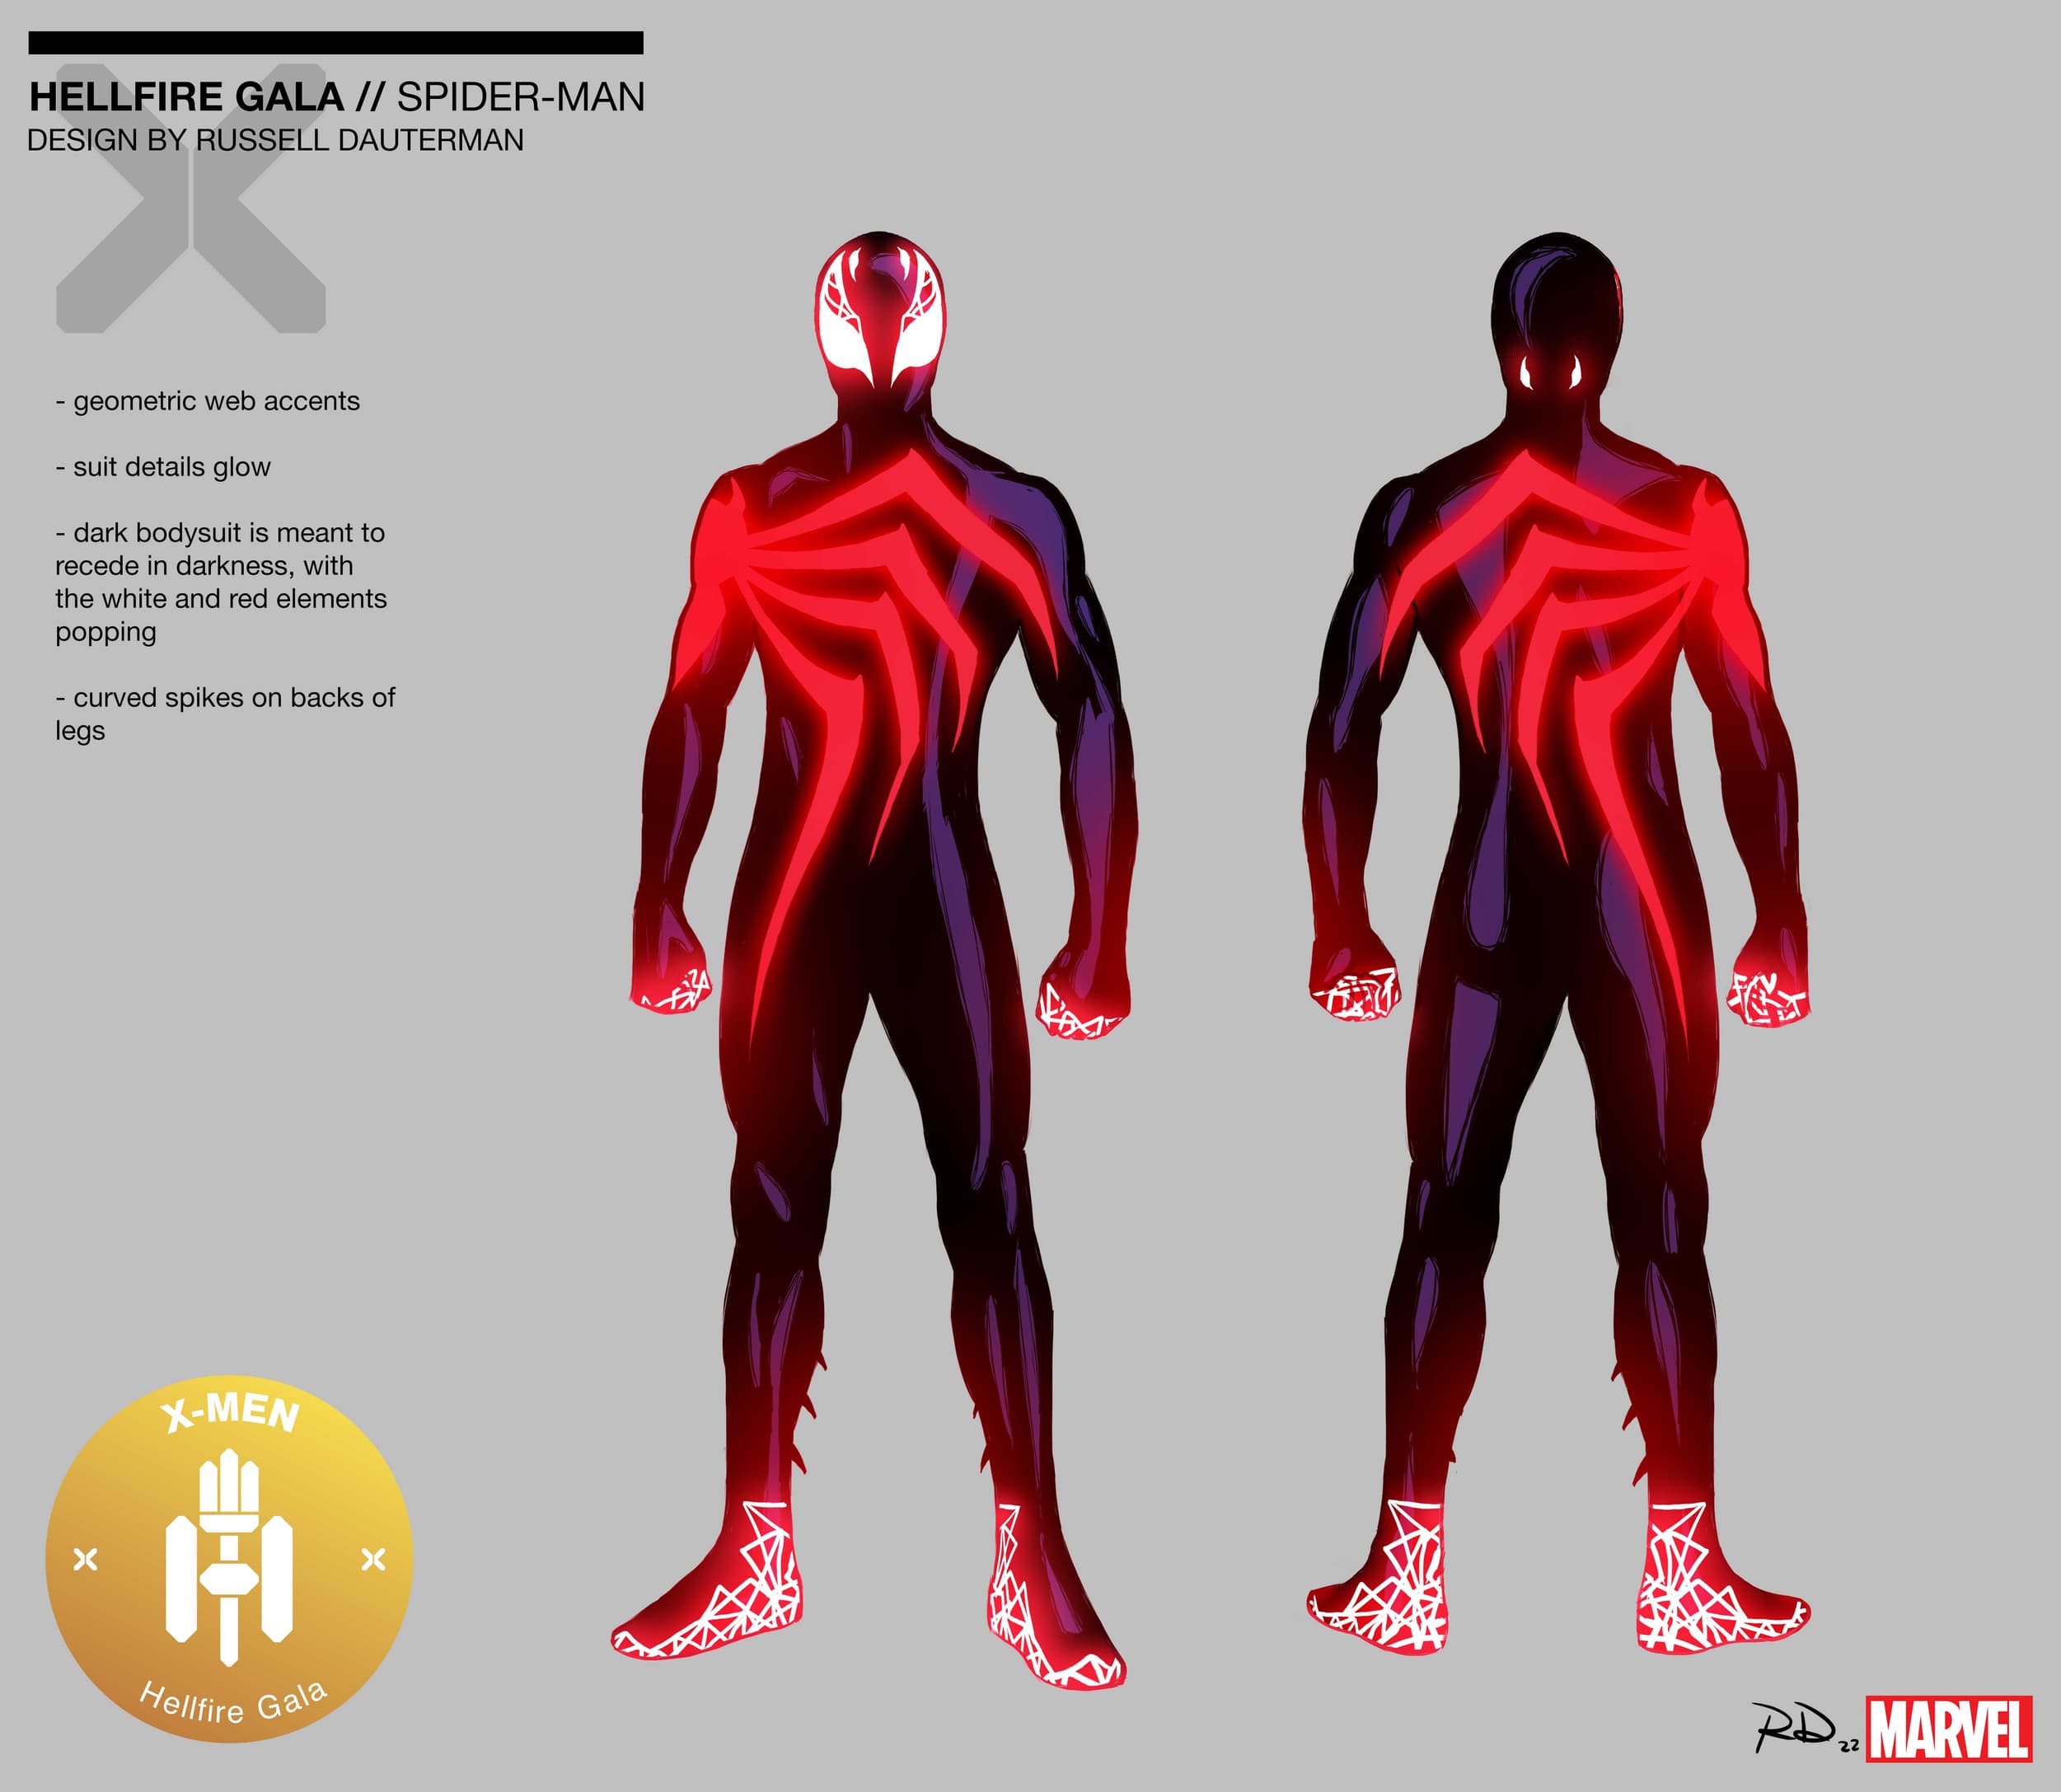 Spider-Man Hellfire Gala 2022 Design by Russell Dauterman